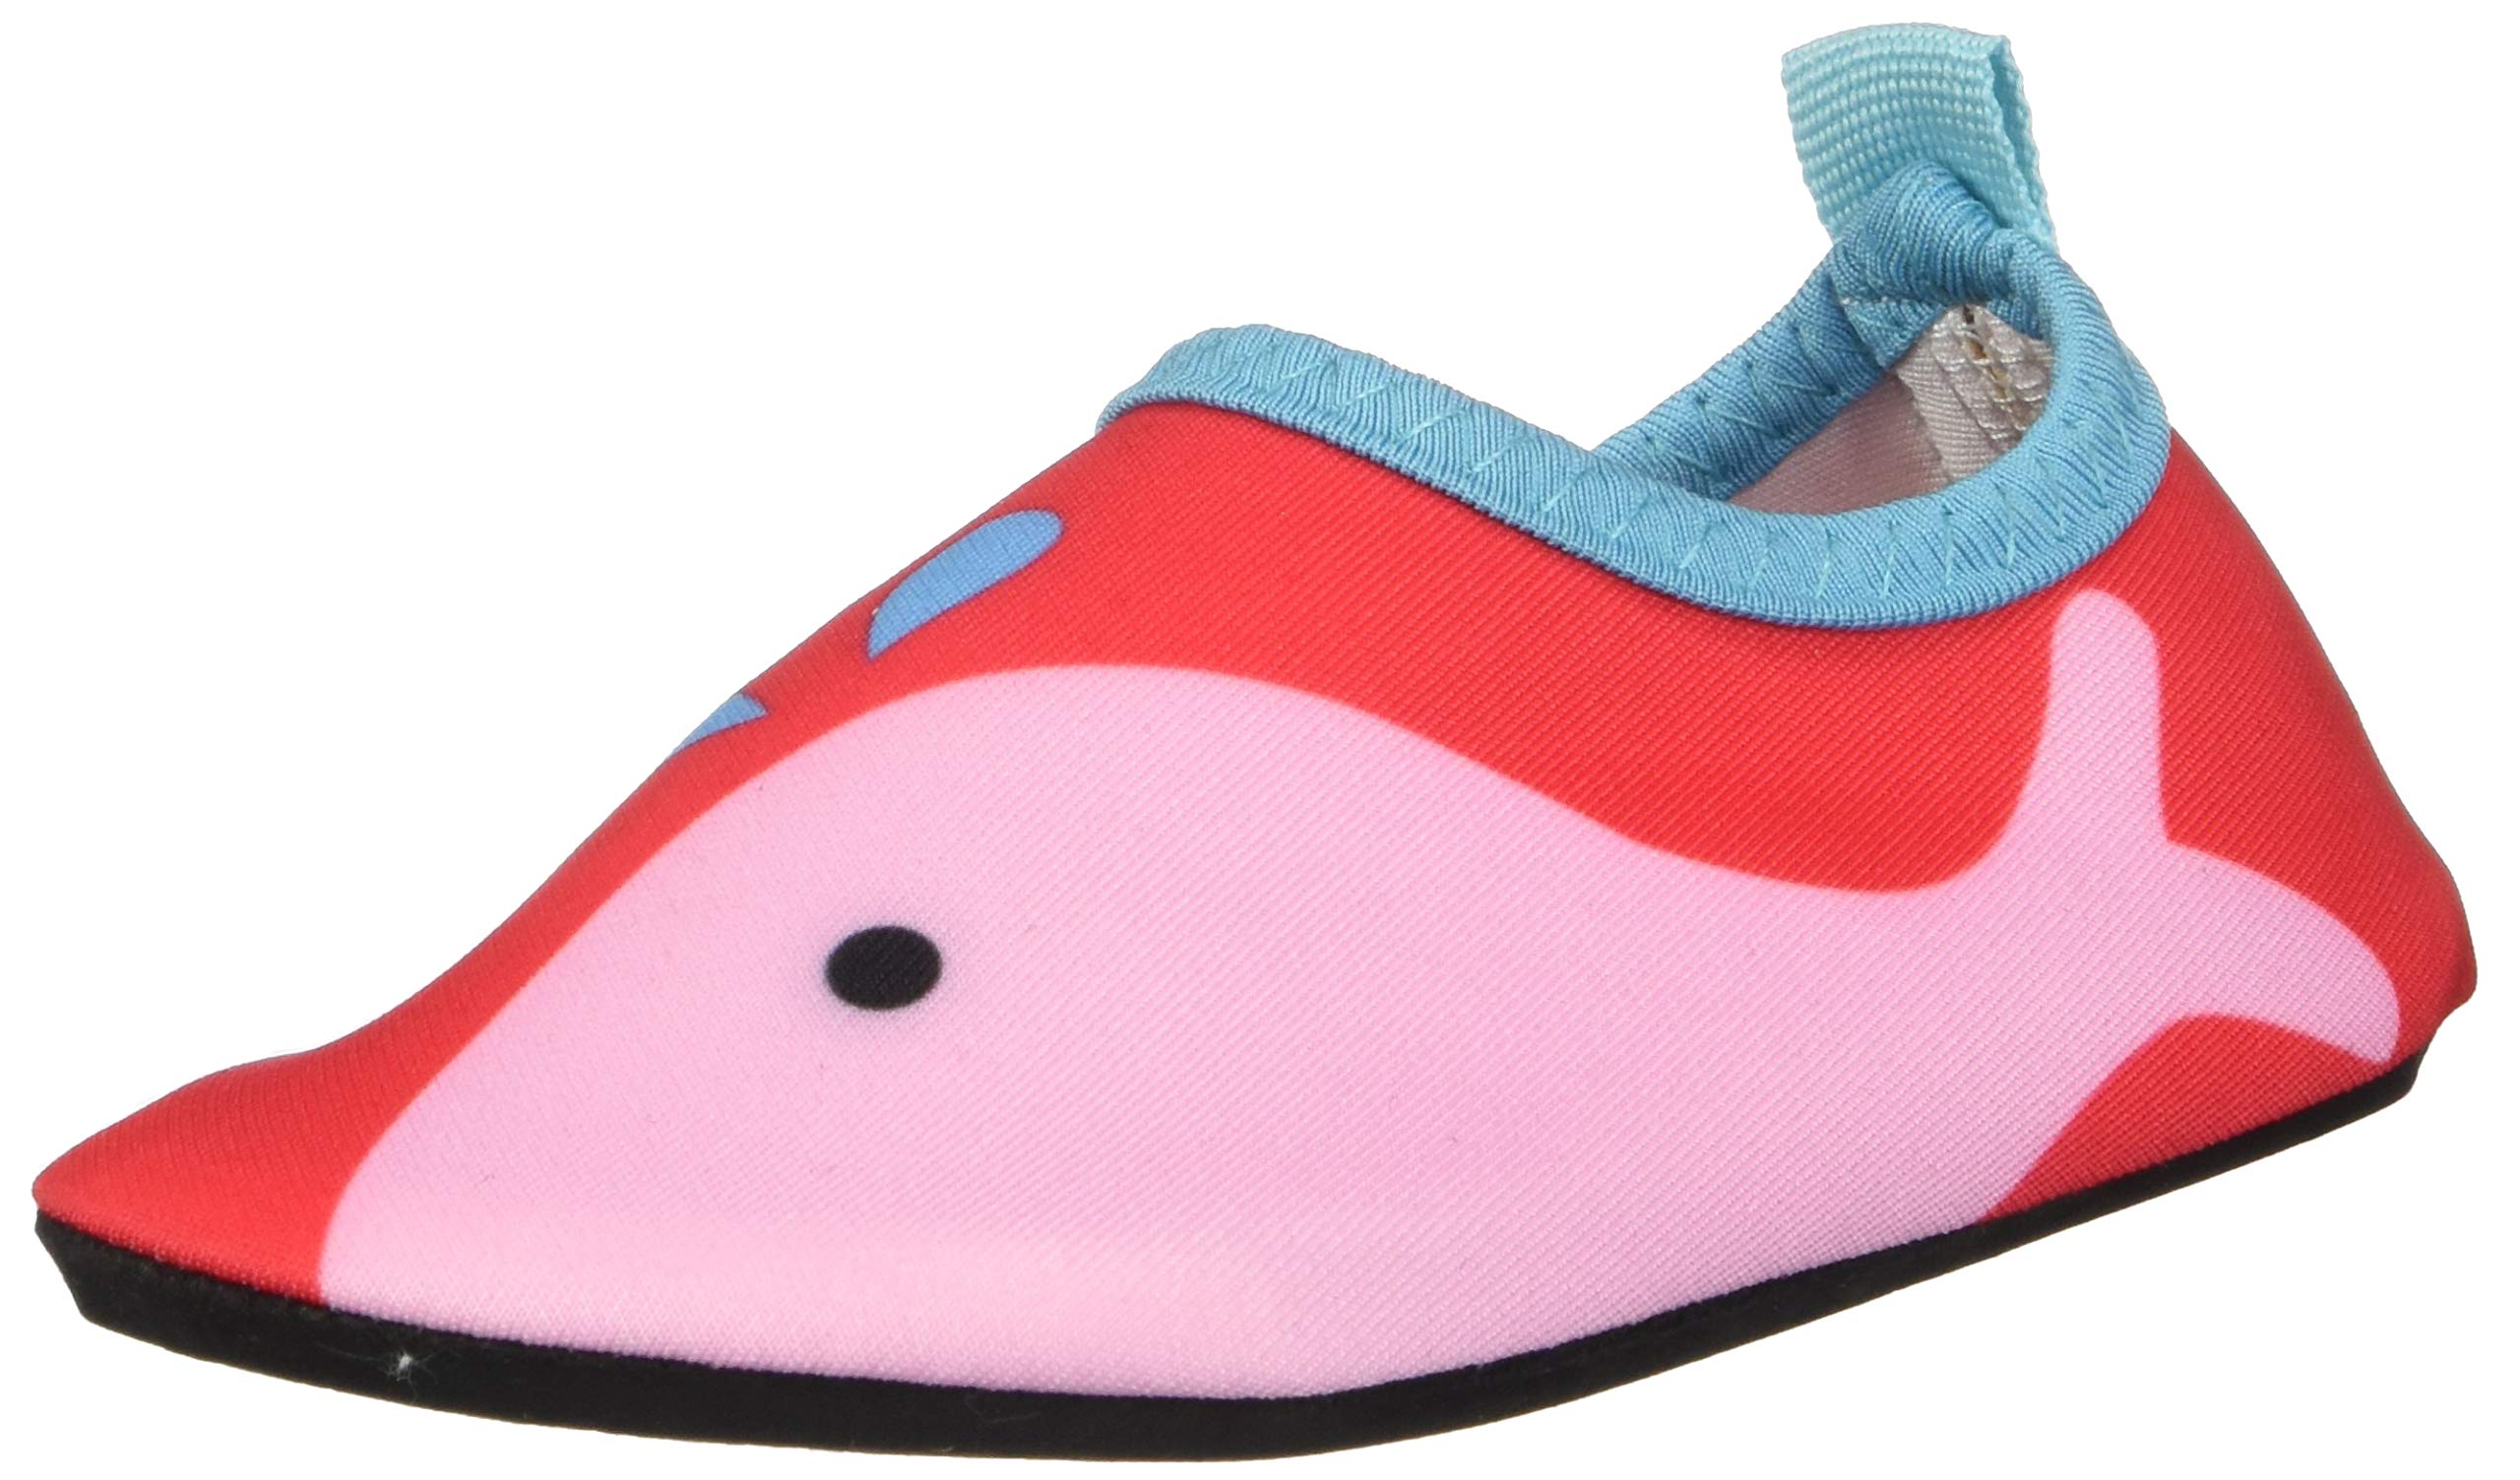 Bigib Toddler Kids Swim Water Shoes Quick Dry Non-Slip Water Skin Barefoot Sports Shoes Aqua Socks for Boys Girls Toddler